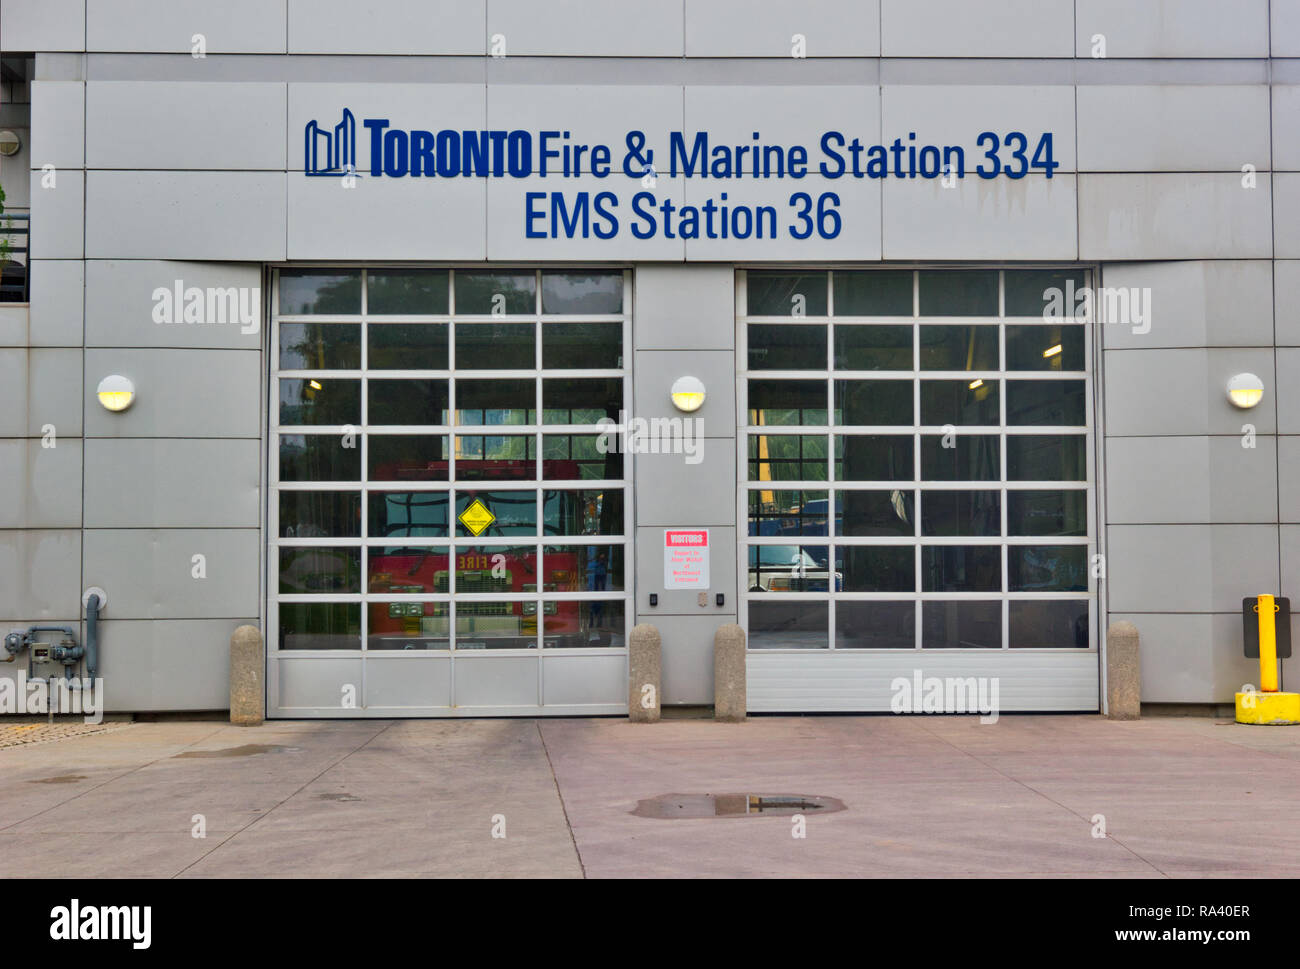 Feuer und Marine Station 334, Toronto, Ontario, Kanada Stockfoto